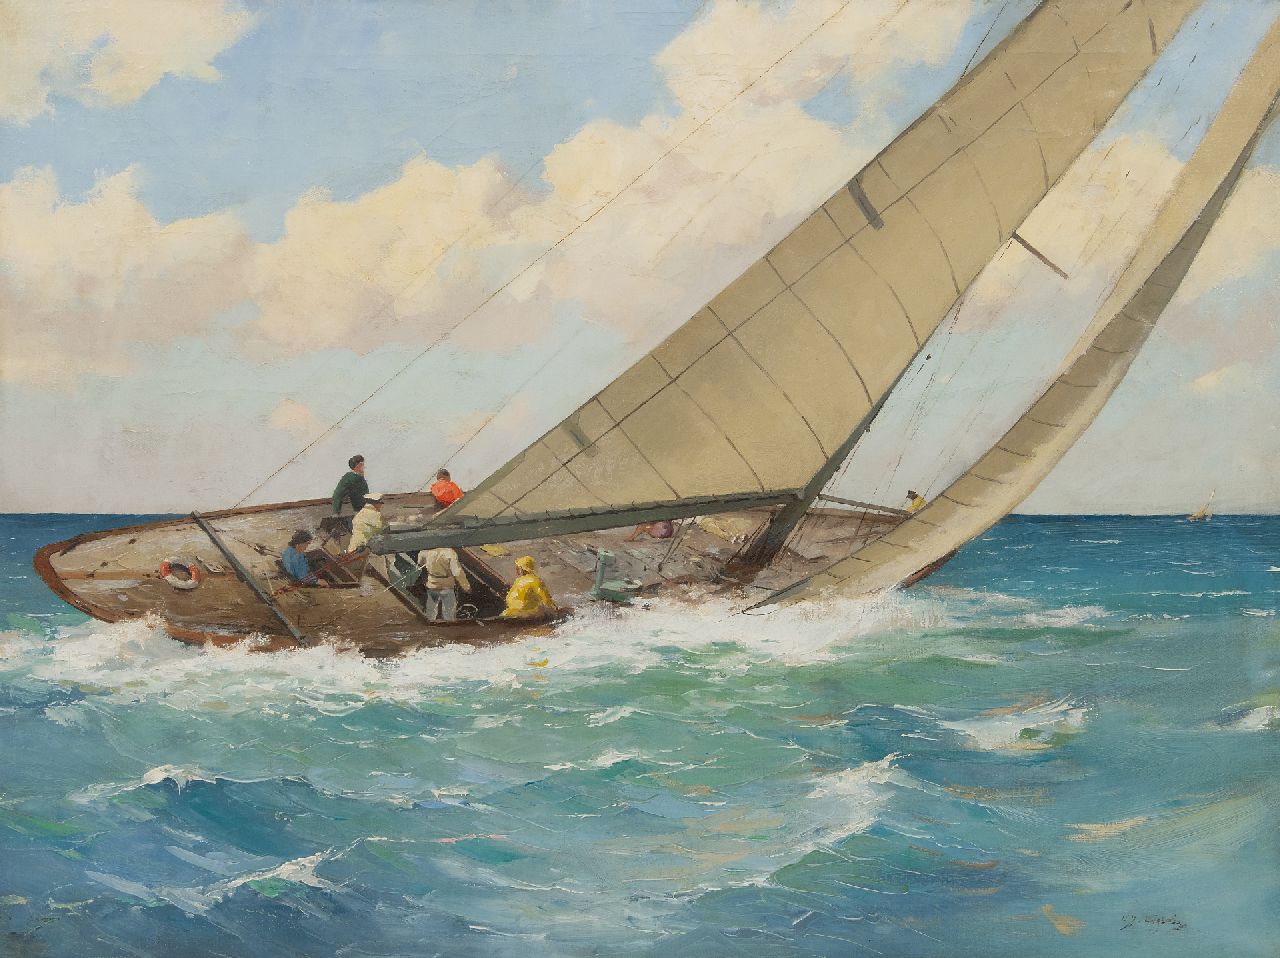 Ligtelijn E.J.  | Evert Jan Ligtelijn | Paintings offered for sale | Sailing yacht in a regatta, oil on canvas 60.2 x 79.6 cm, signed l.r.